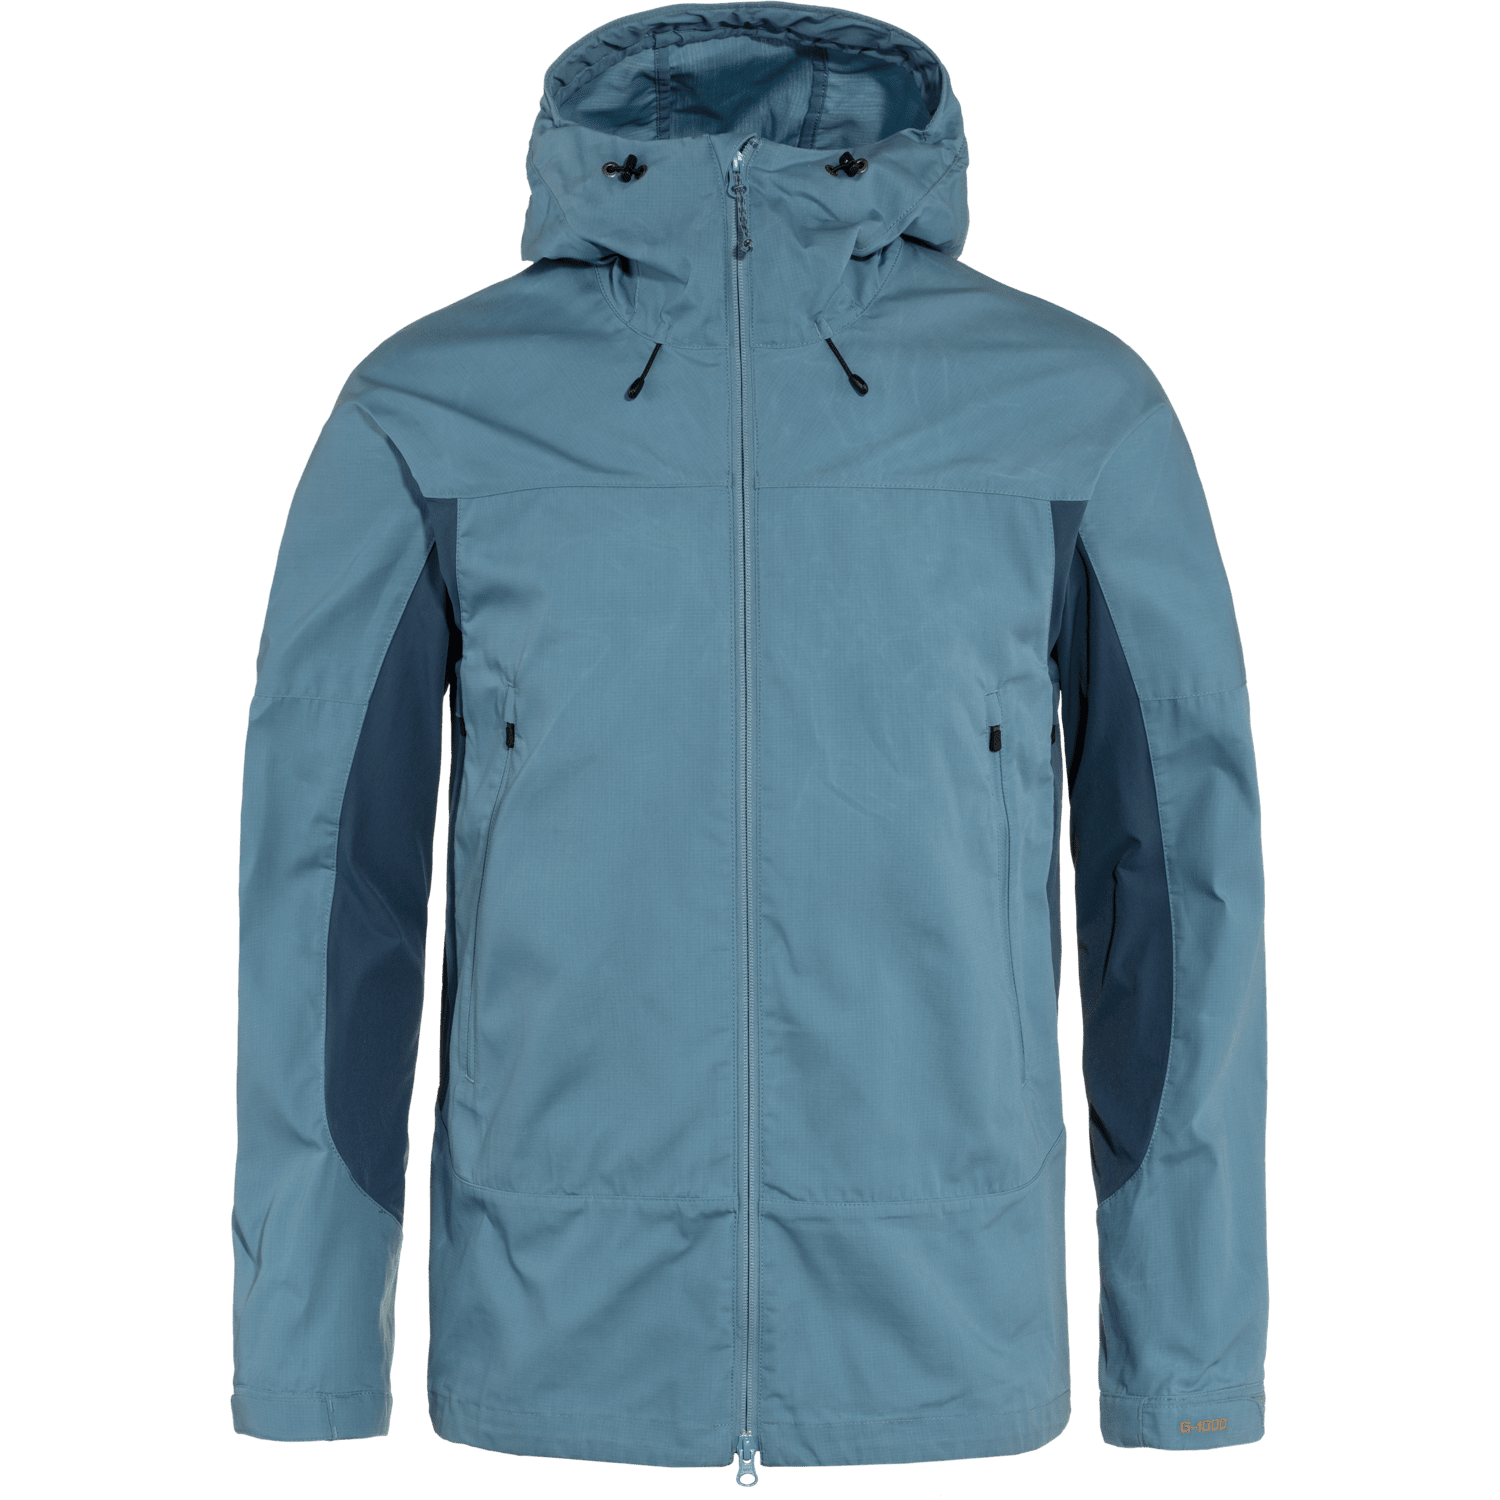 Fjällräven - M's Abisko Lite Trekking Jacket - G-1000® Lite Eco - Recycled PET & Organic cotton - Weekendbee - sustainable sportswear